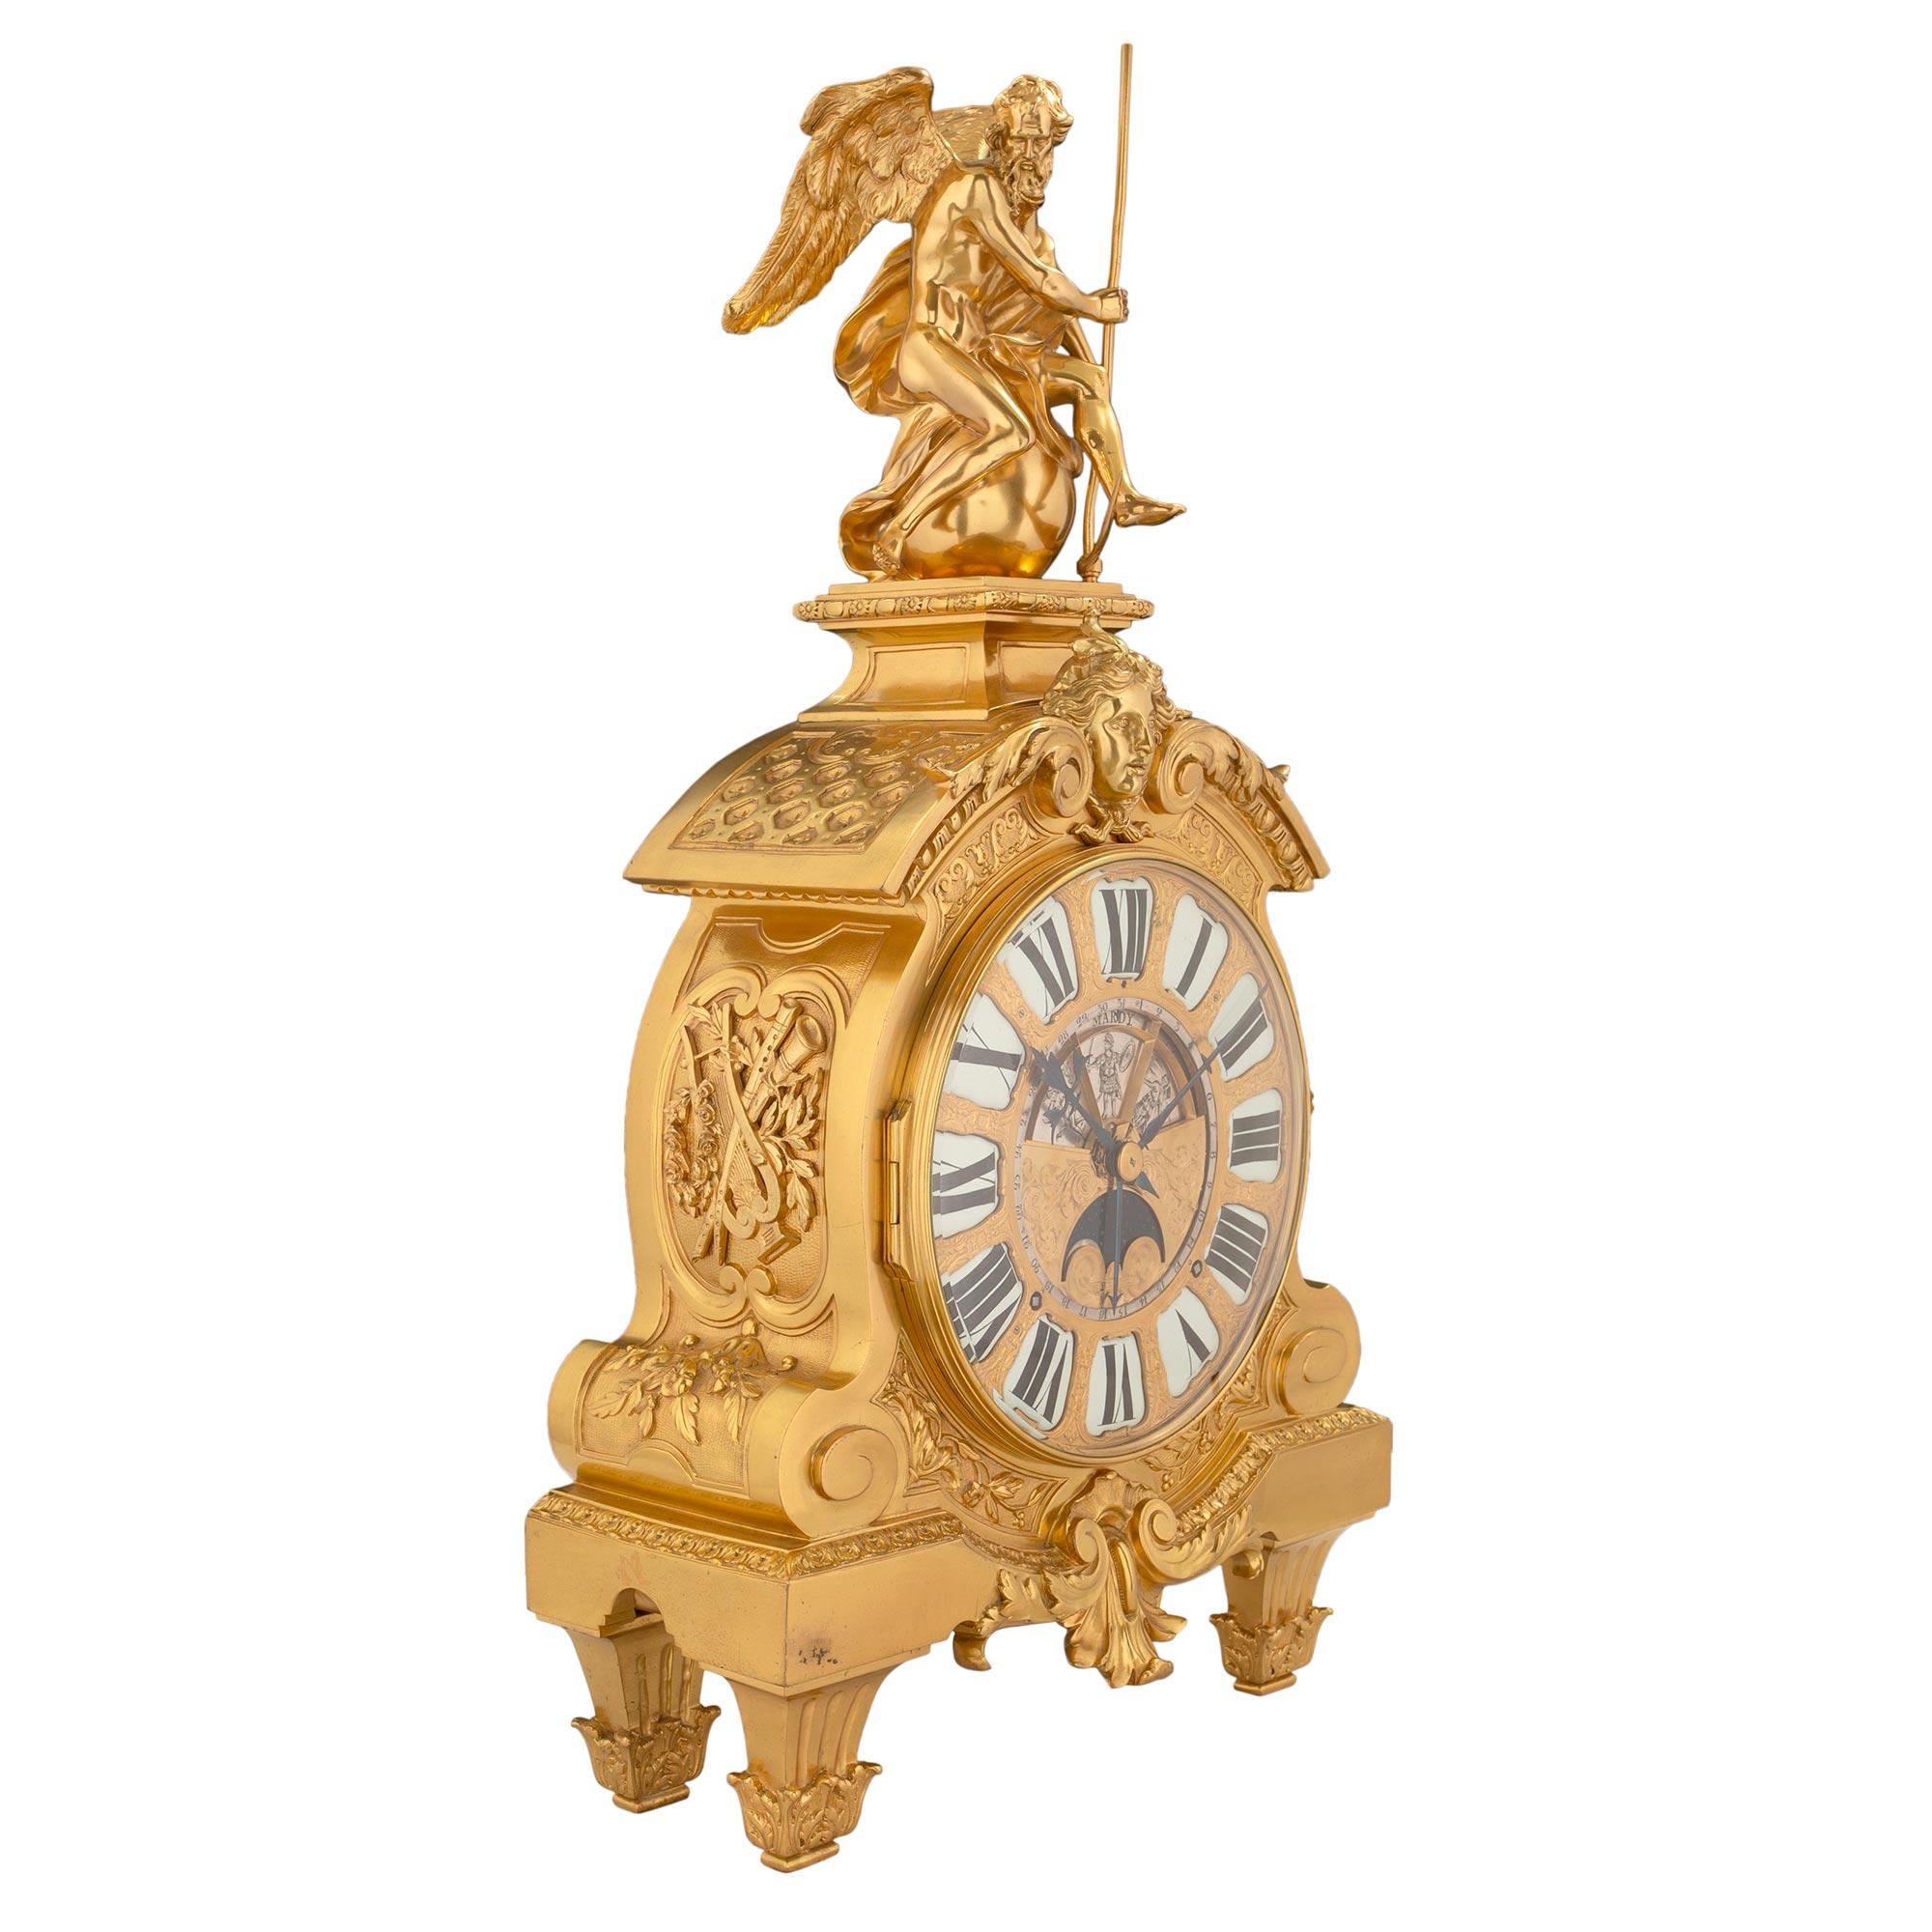 A most impressive French 19th century Louis XIV st. ormolu clock stamped 'DENIERE A PARIS